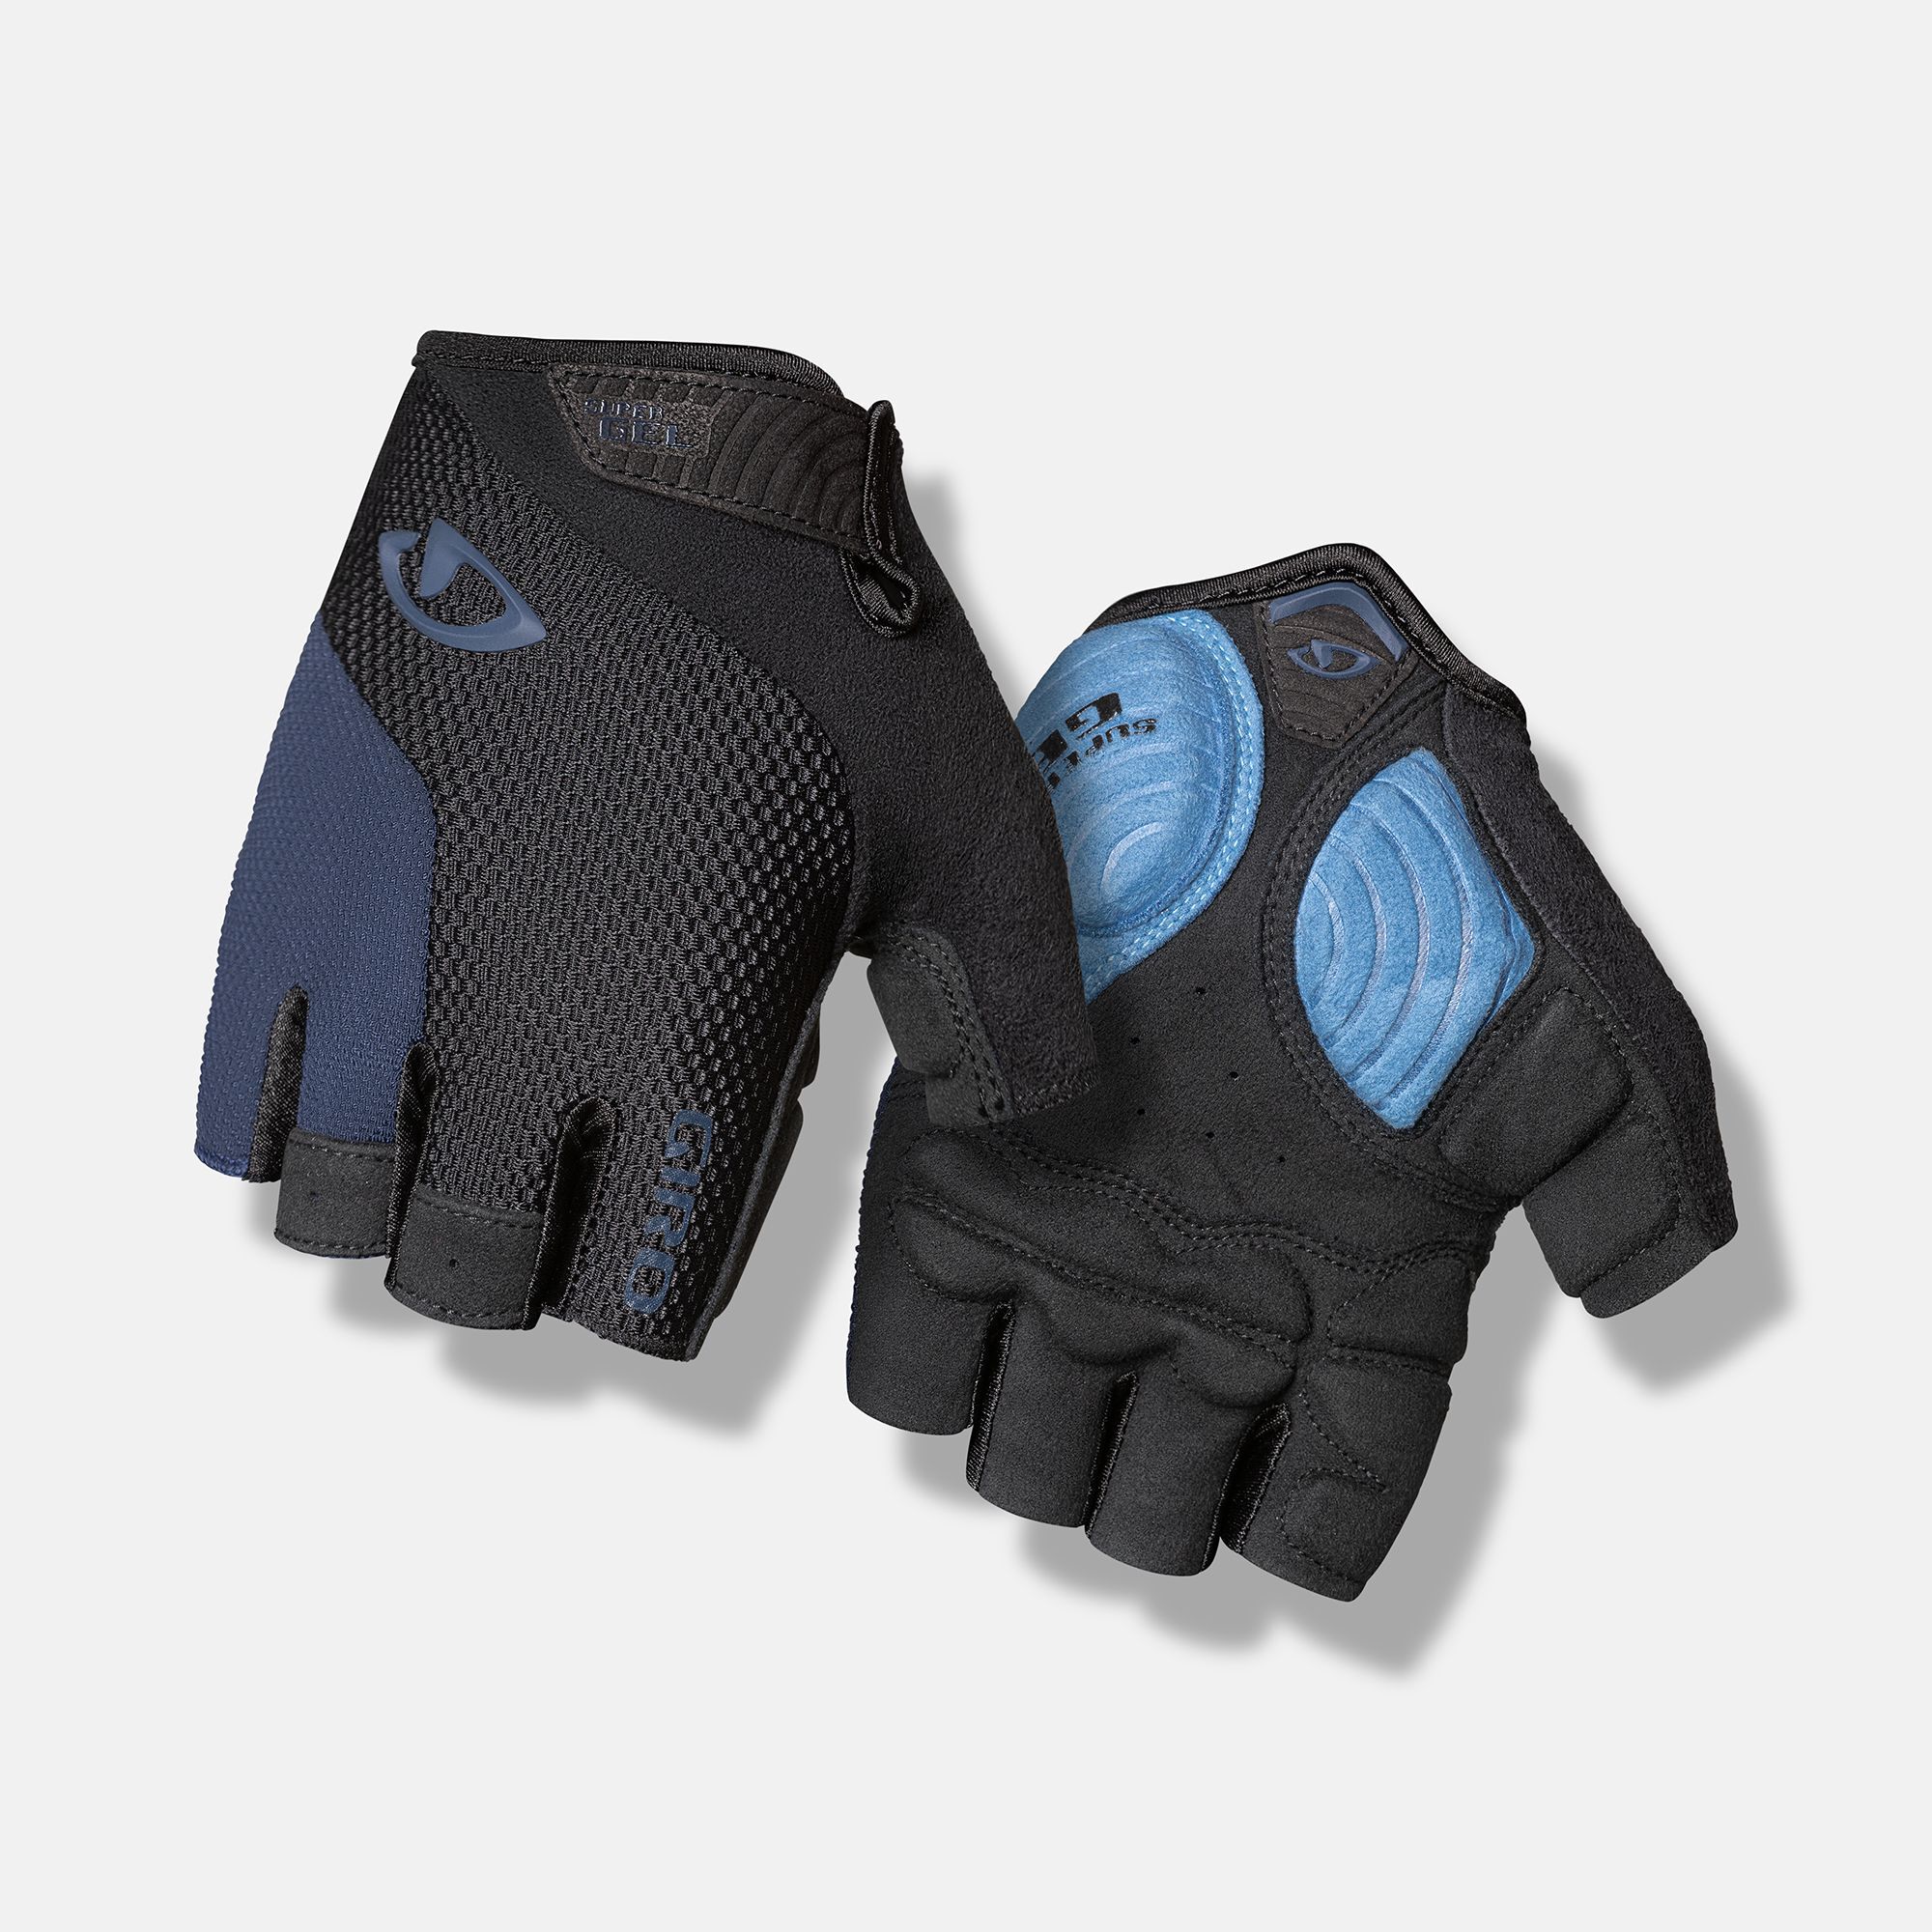 Giro Radhandschuhe Handschuh SIV blau atmungsaktiv flexibel schützend gestreift 